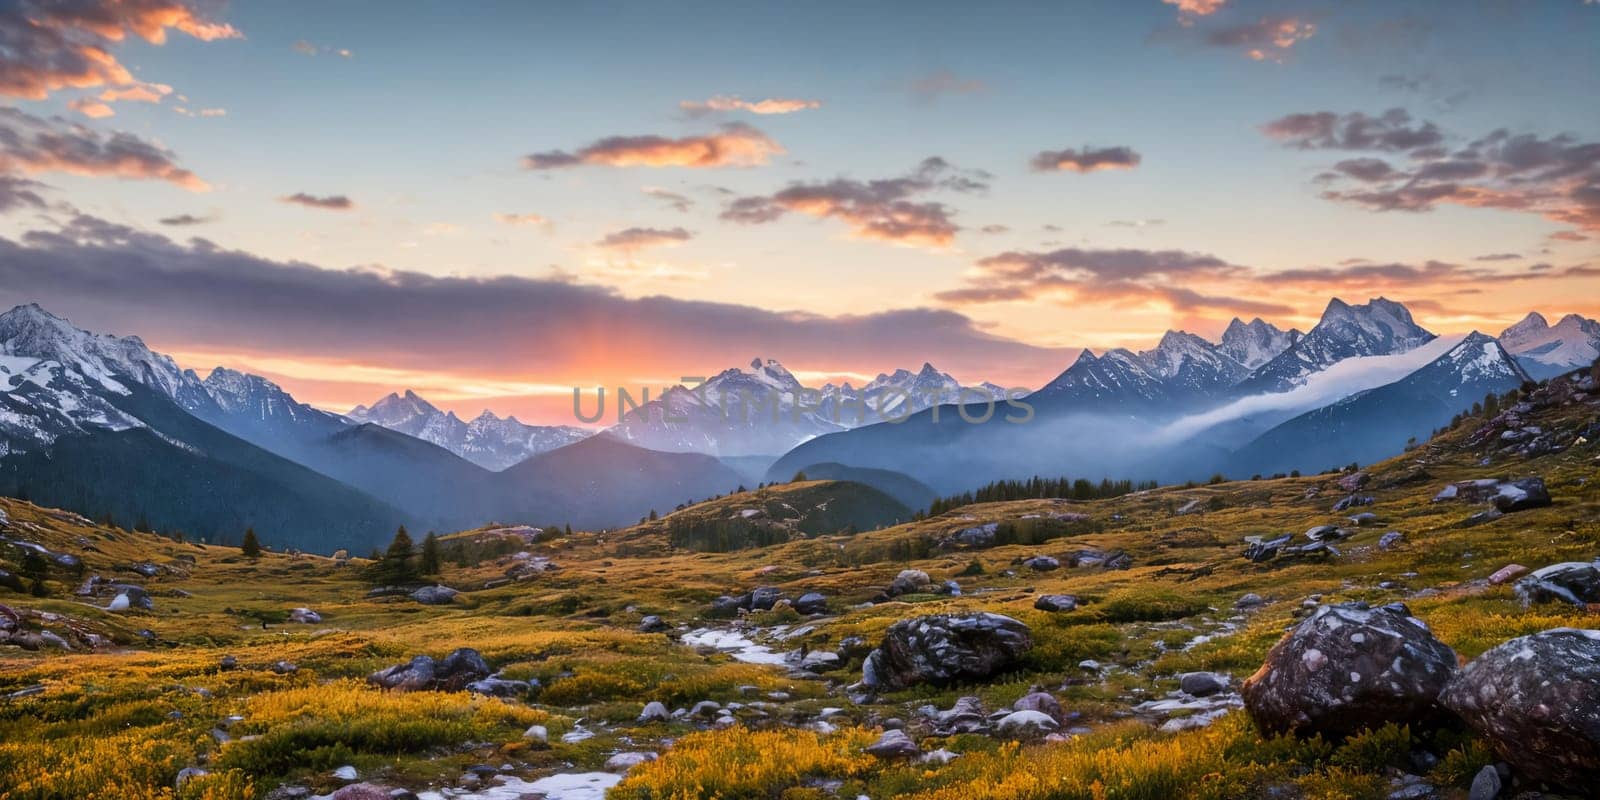 Serene Mountain Vista. Capture a breathtaking sunrise over snow-capped mountains by GoodOlga